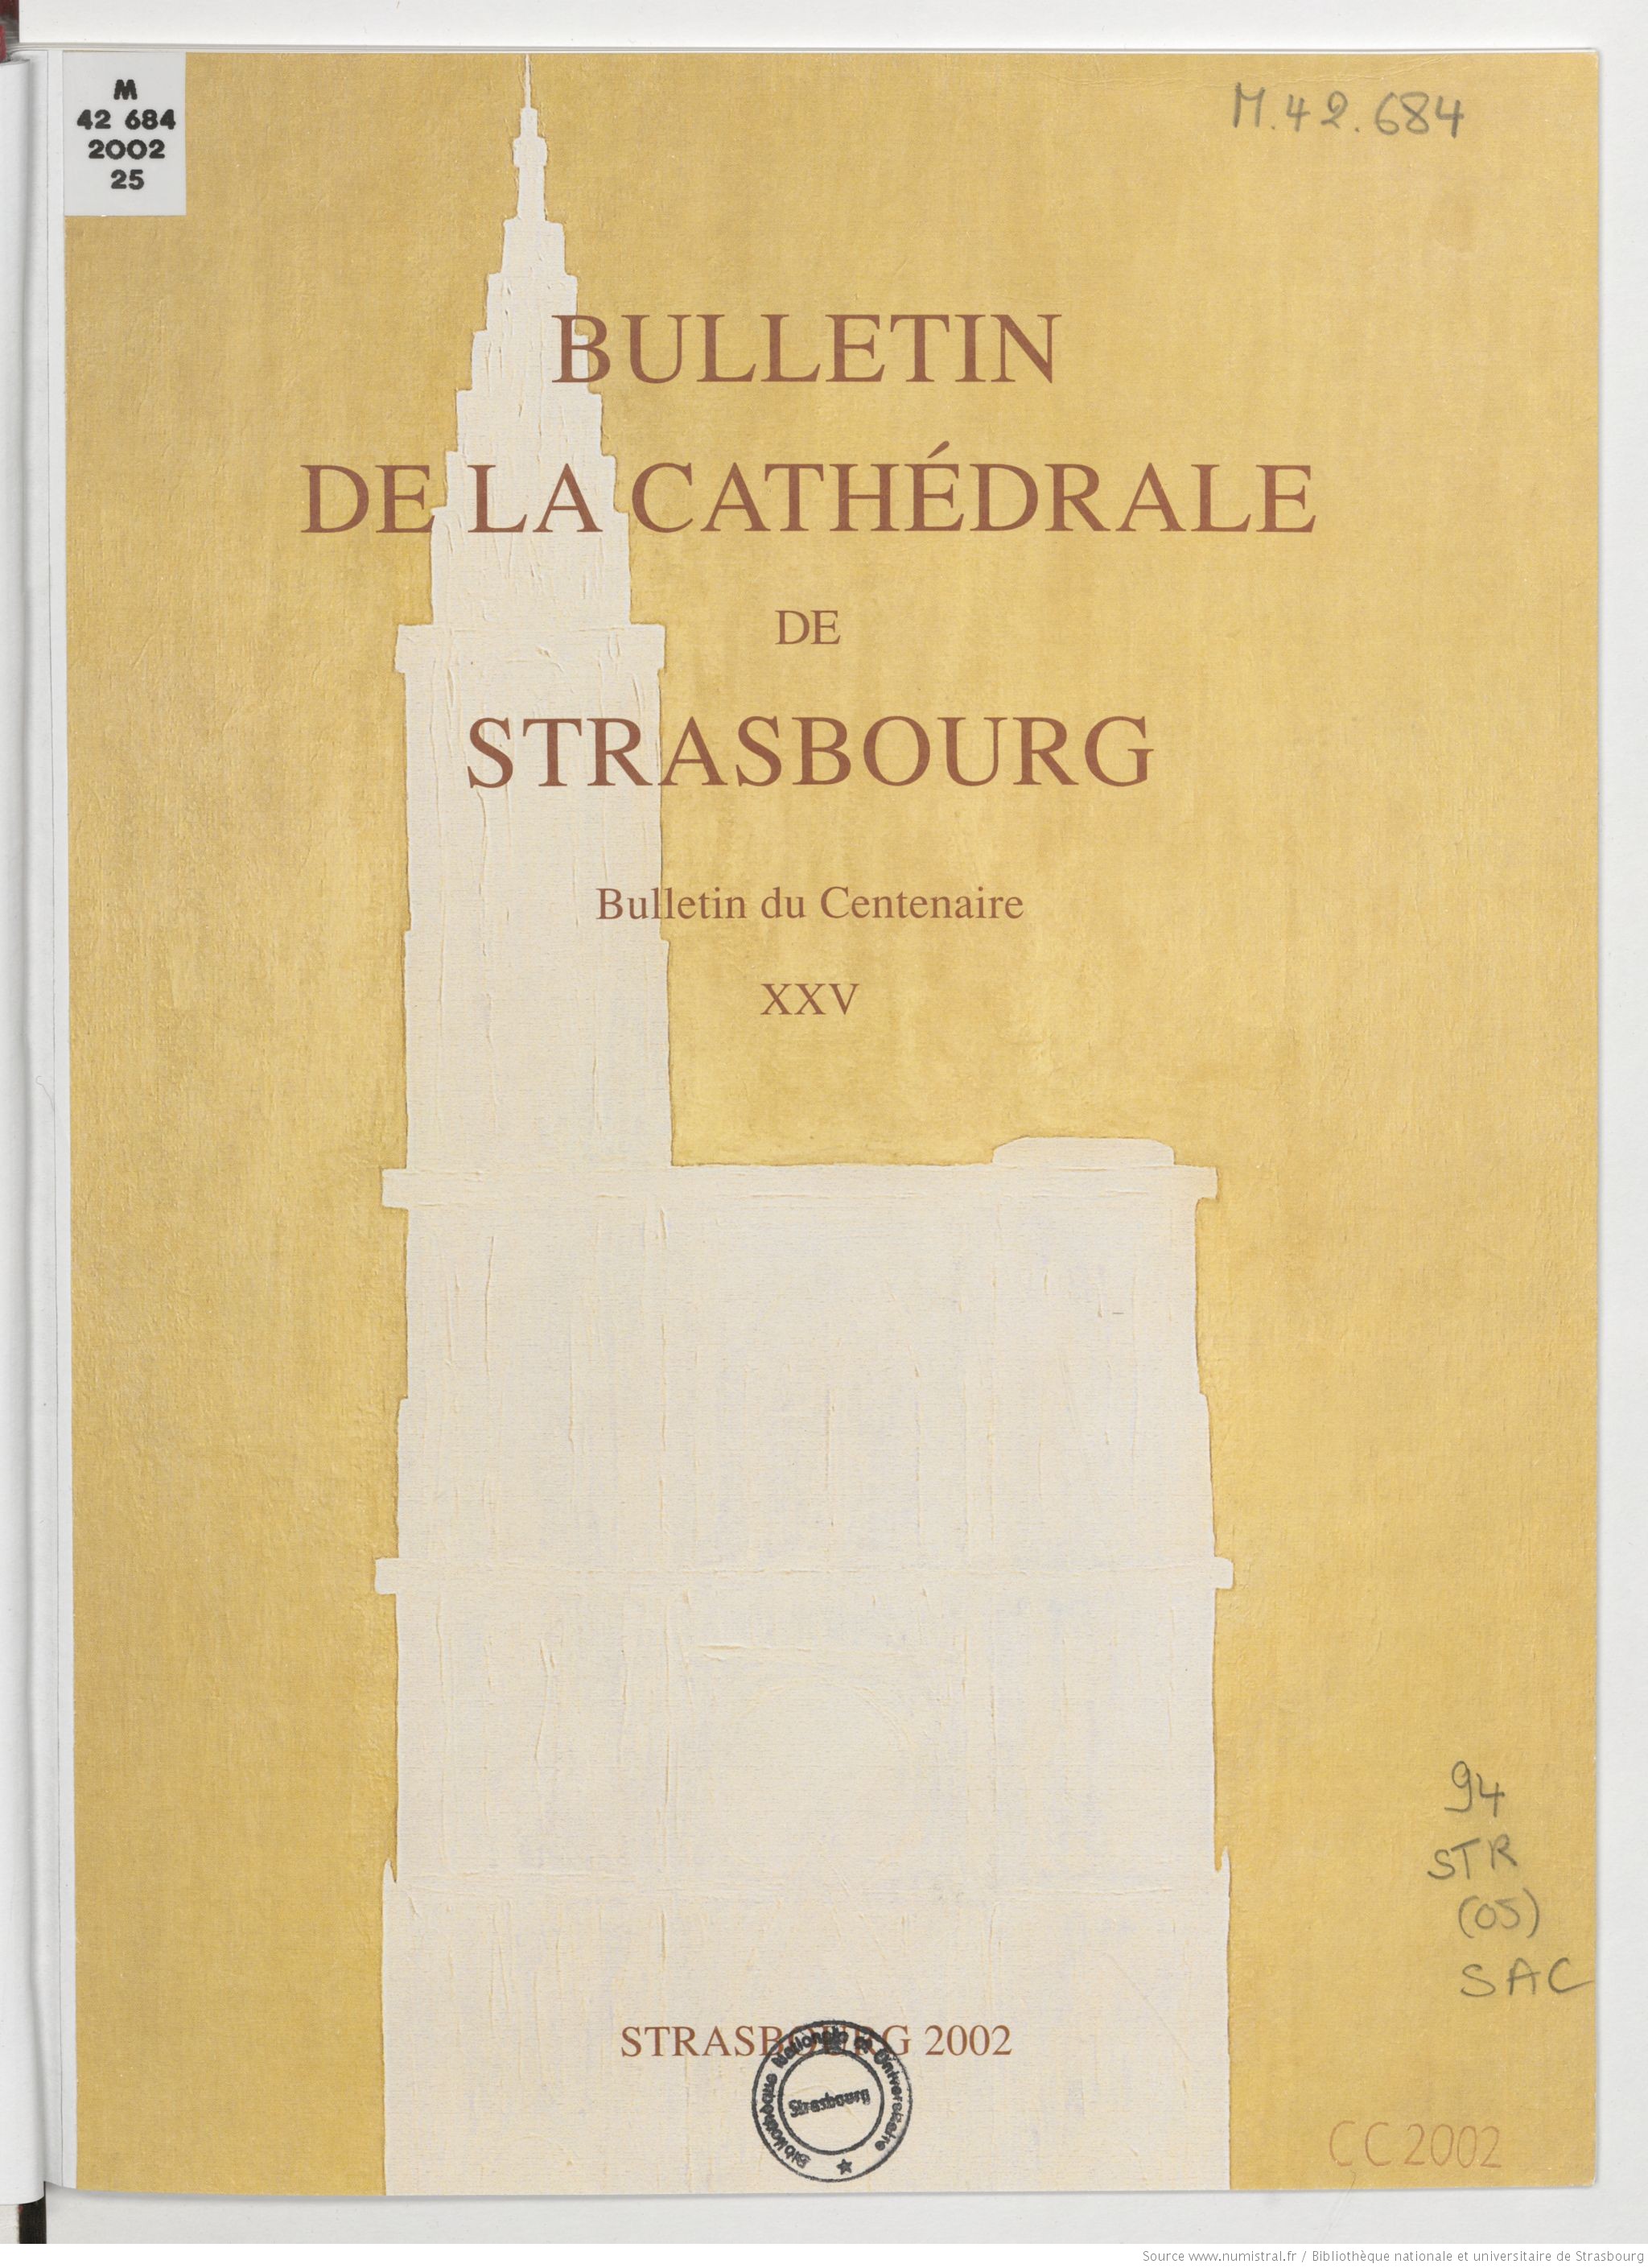 Bulletin de la cathédrale de Strasbourg